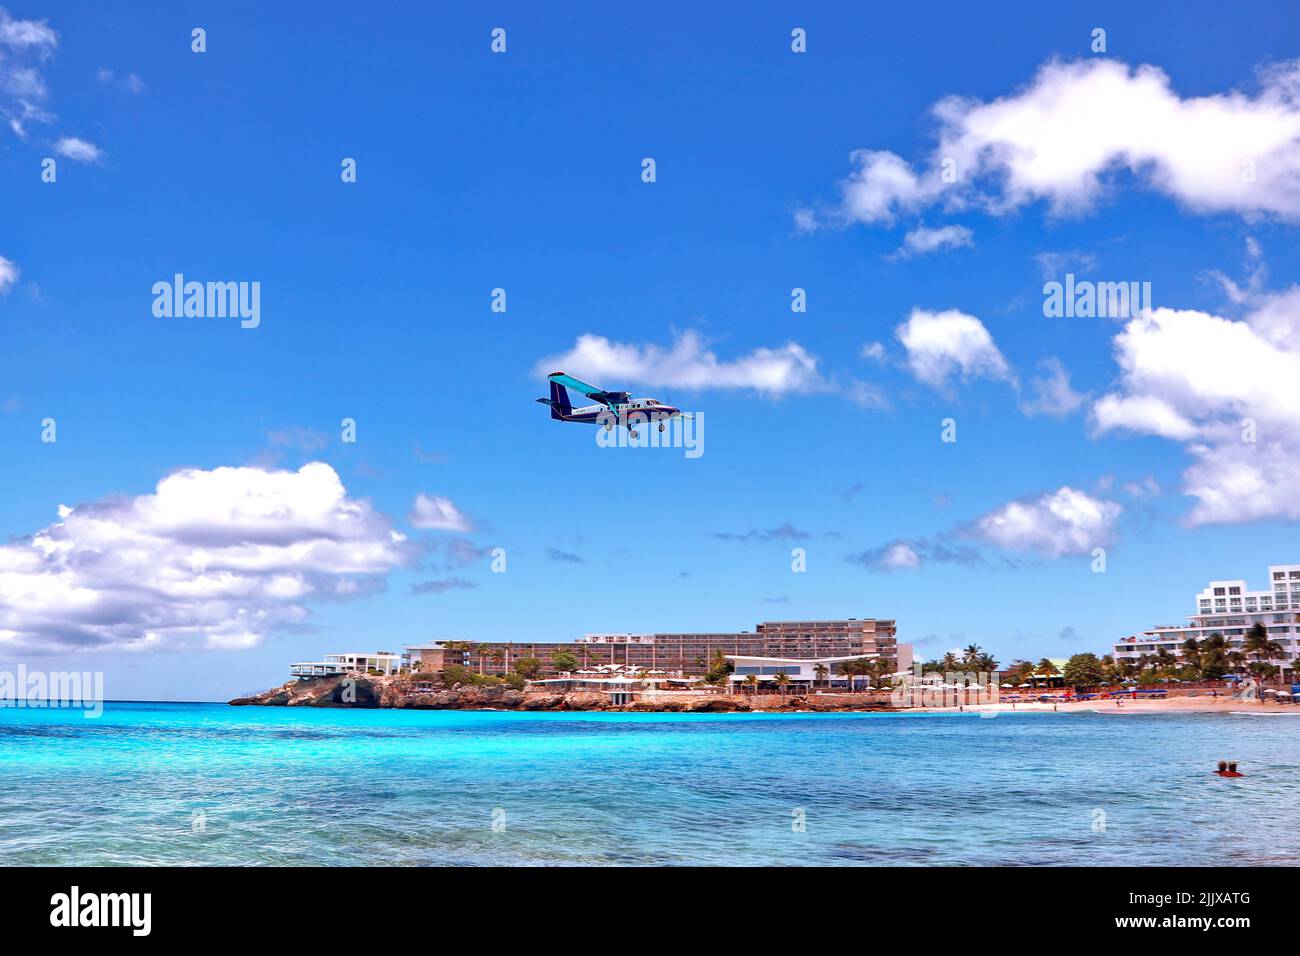 Flughafenstrand Maho Beach, Flugzeug landet, St. Maarten, Karibik | airport beach Maho Beach, landing plane, St. Maarten, Caribbean Stock Photo